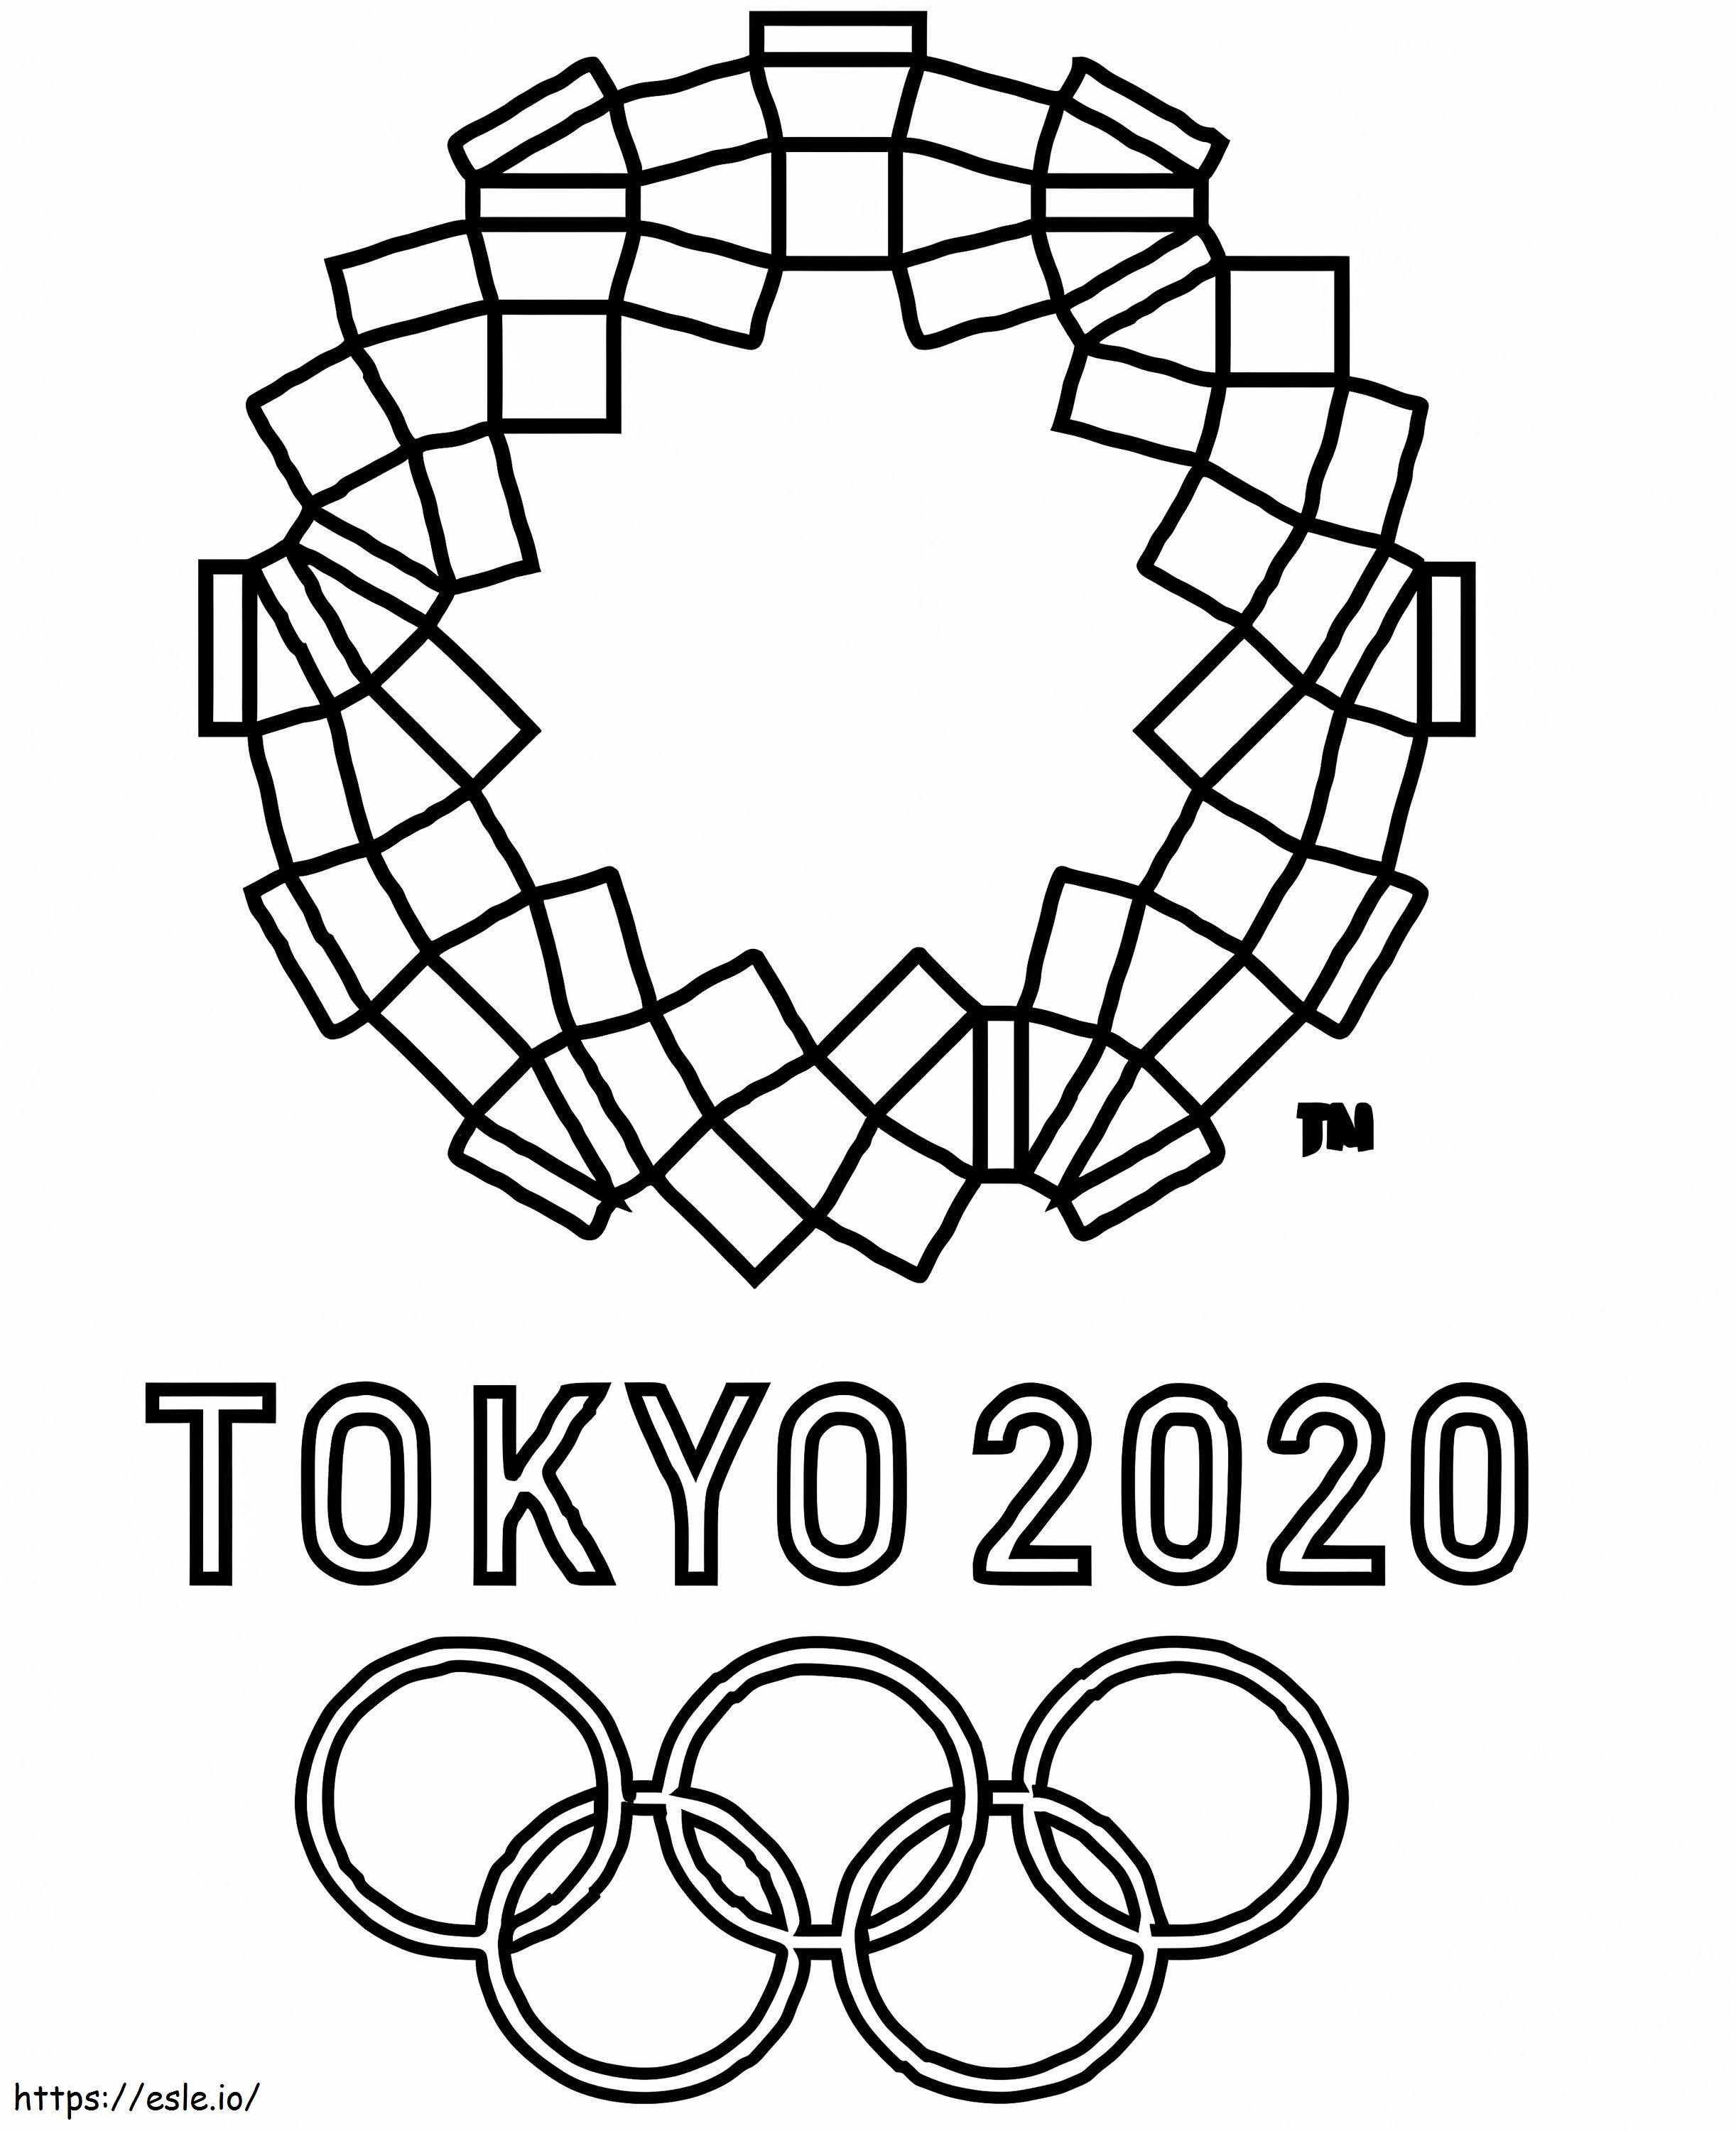 Tokio 2020 para colorear